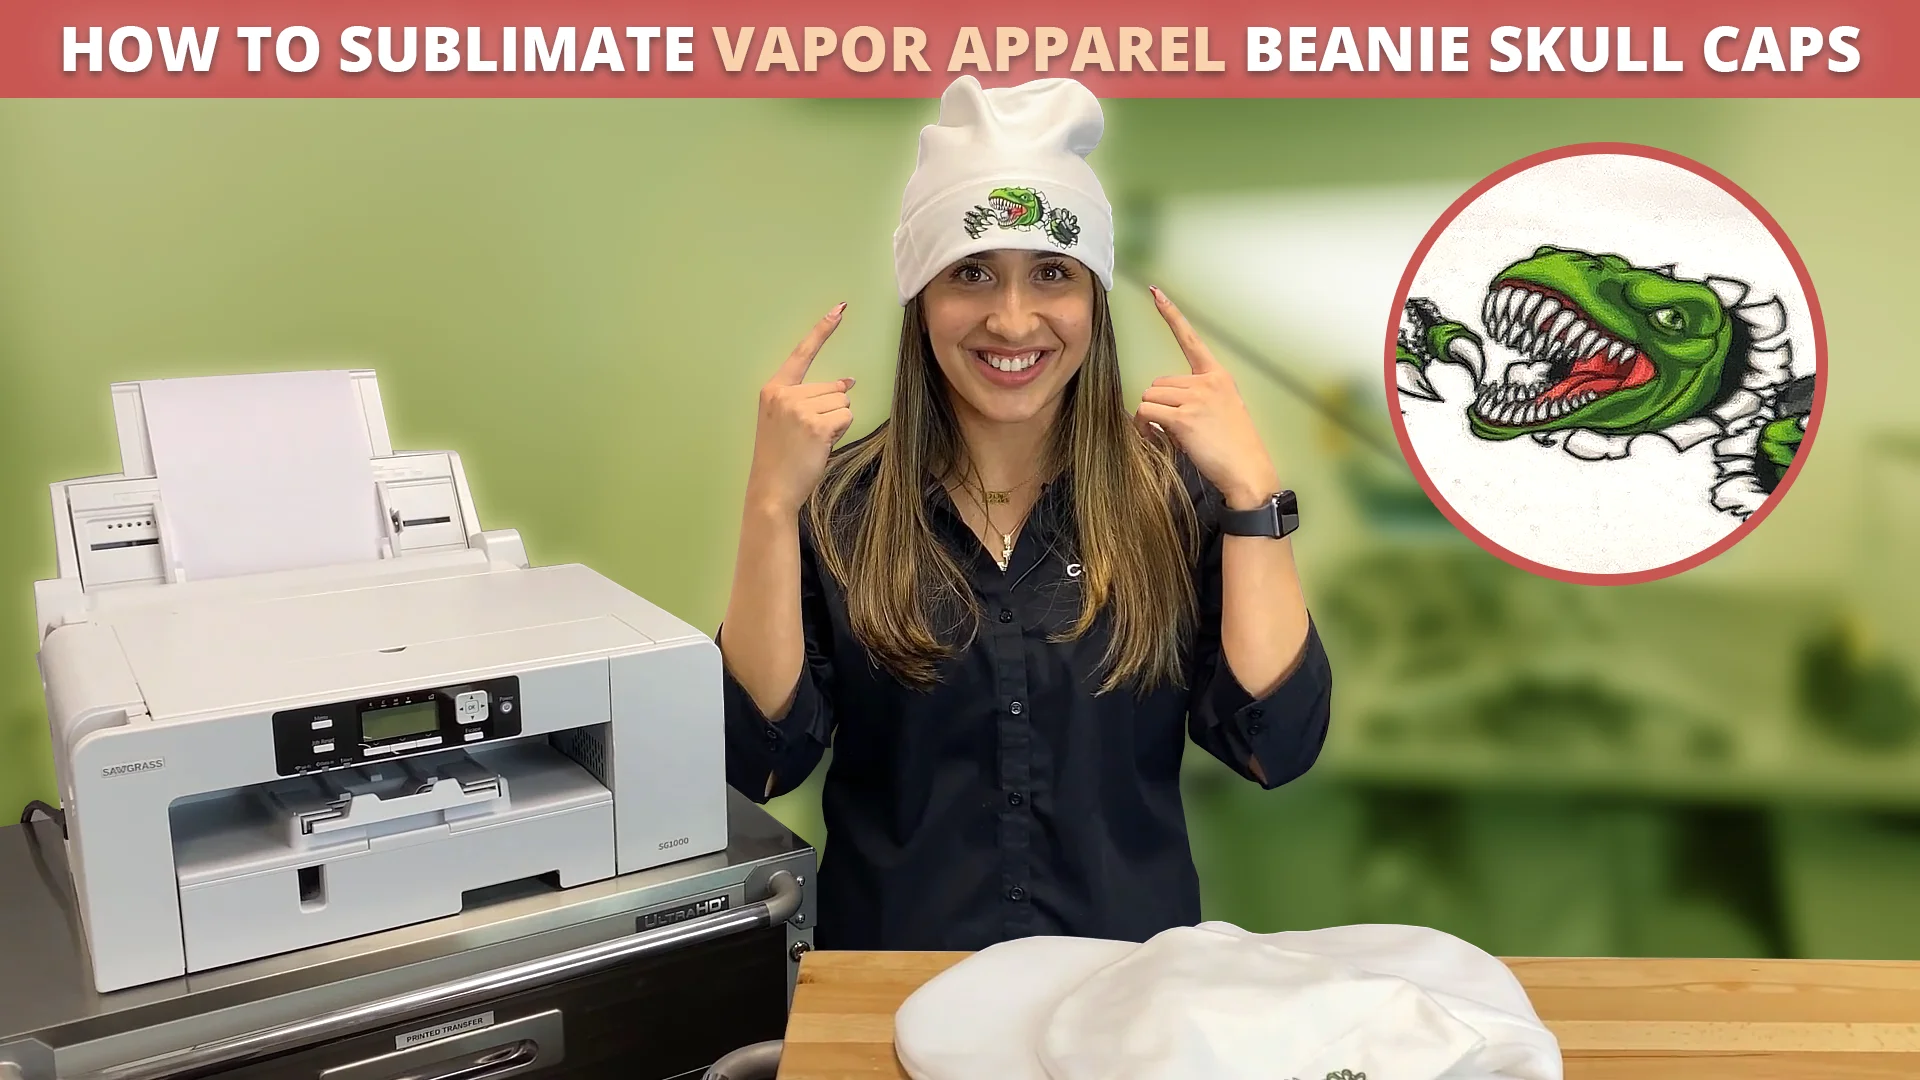 How To Sublimate Vapor Apparel Beanie Skull Caps on Vimeo